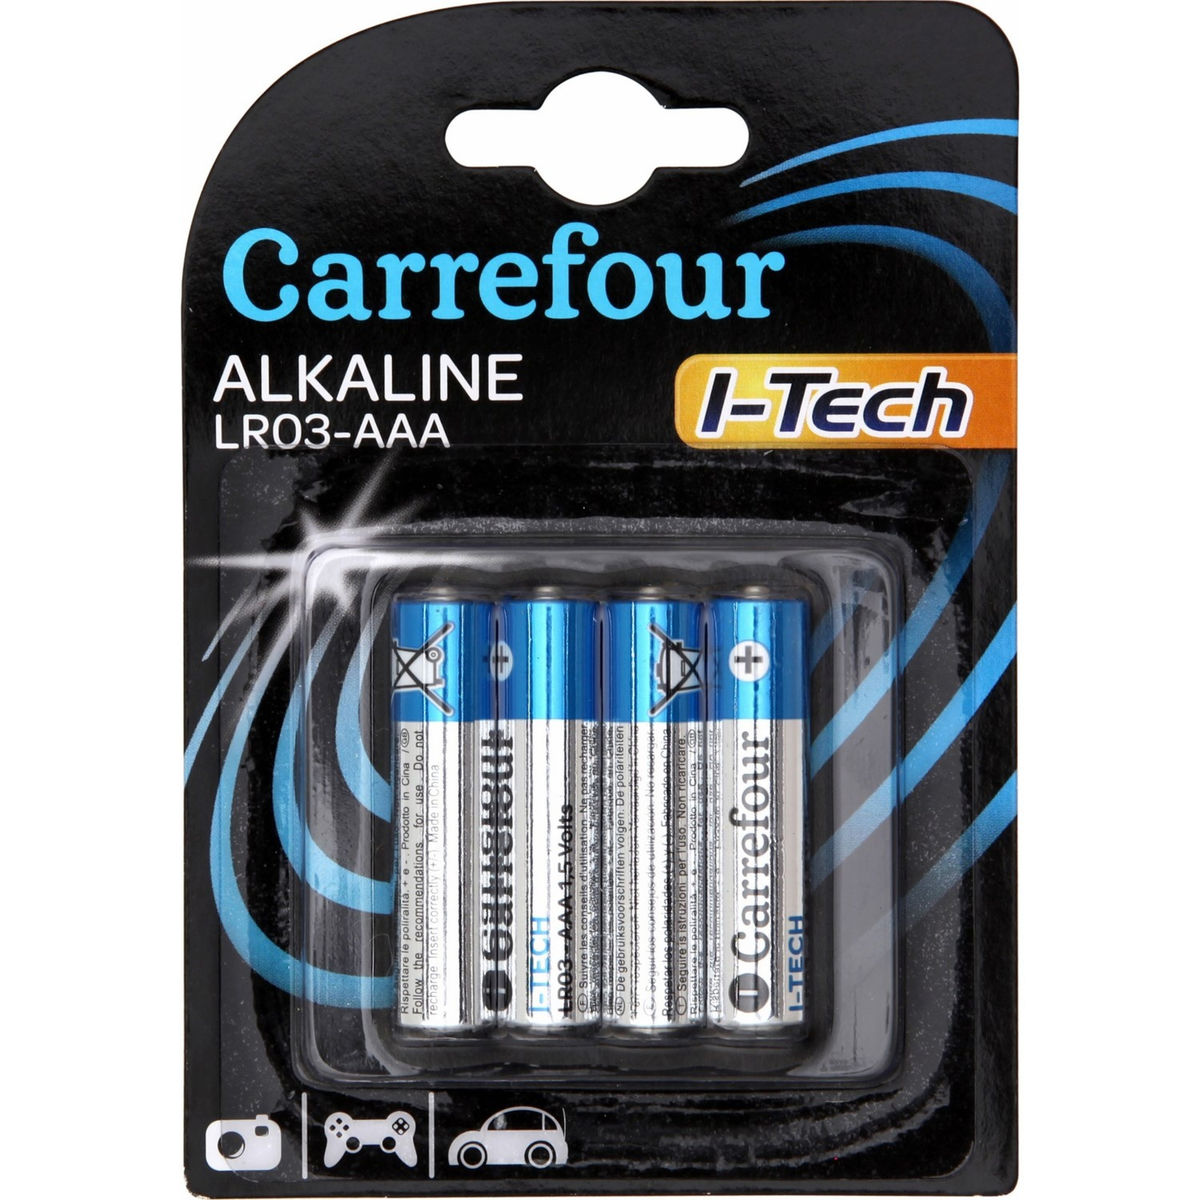 Carrefour 4 Piles Alkaline LR03-AAA